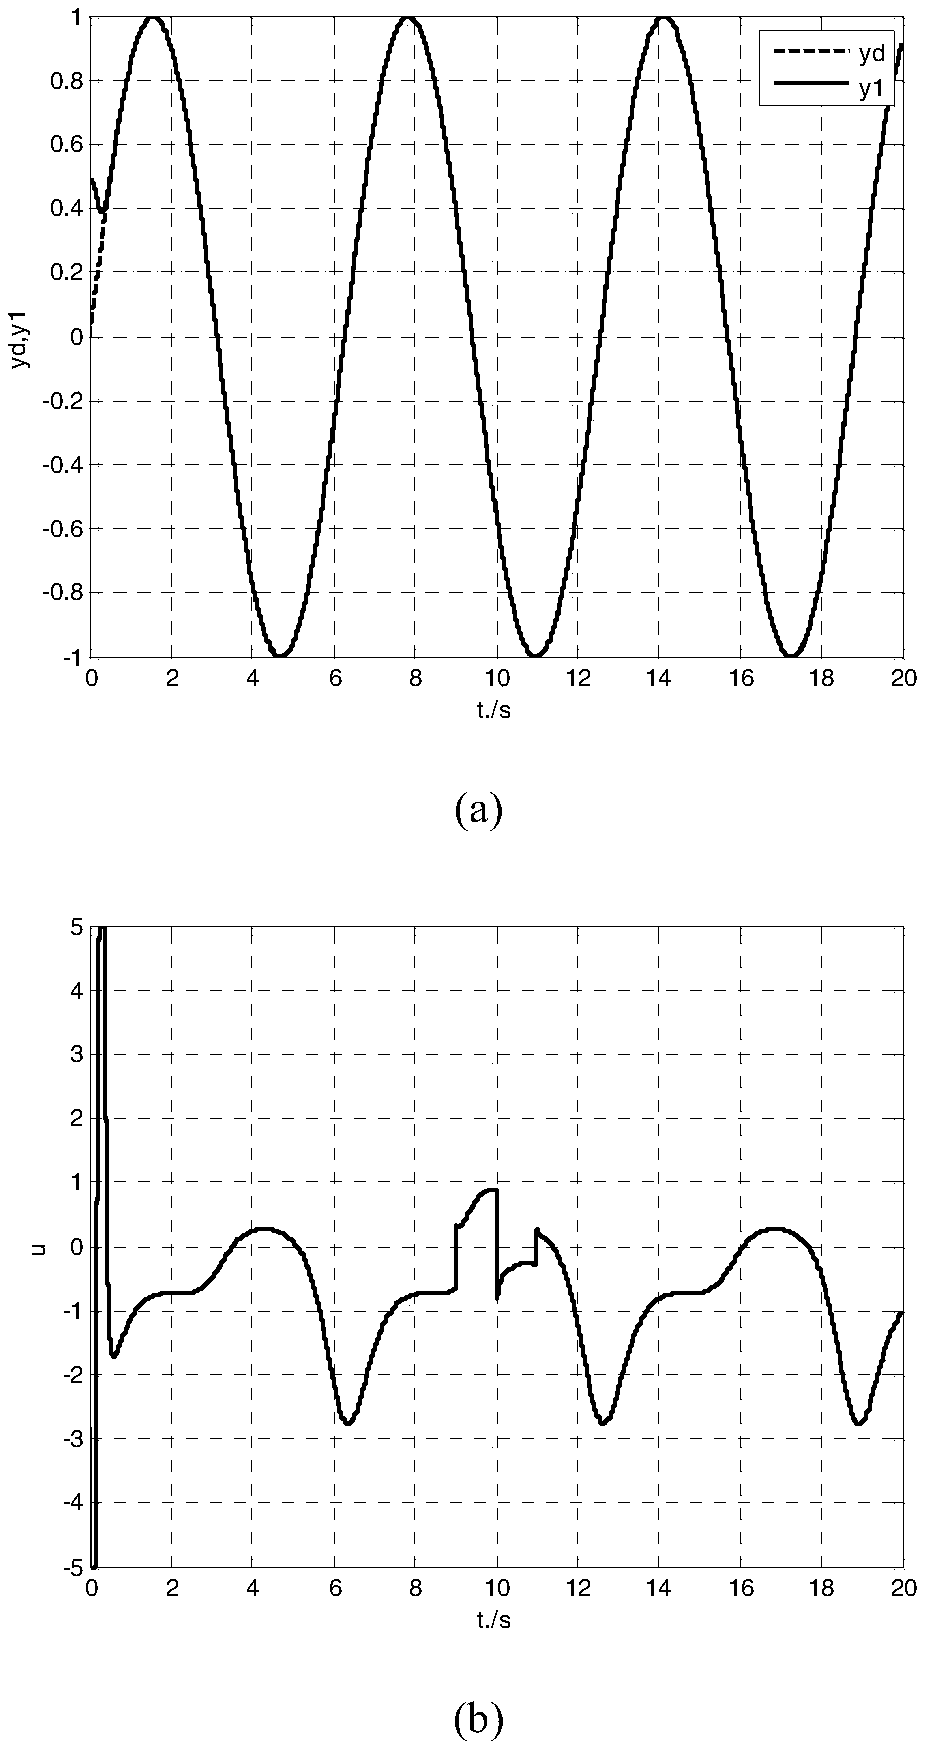 Single-speed adaptive proportional-derivative control method